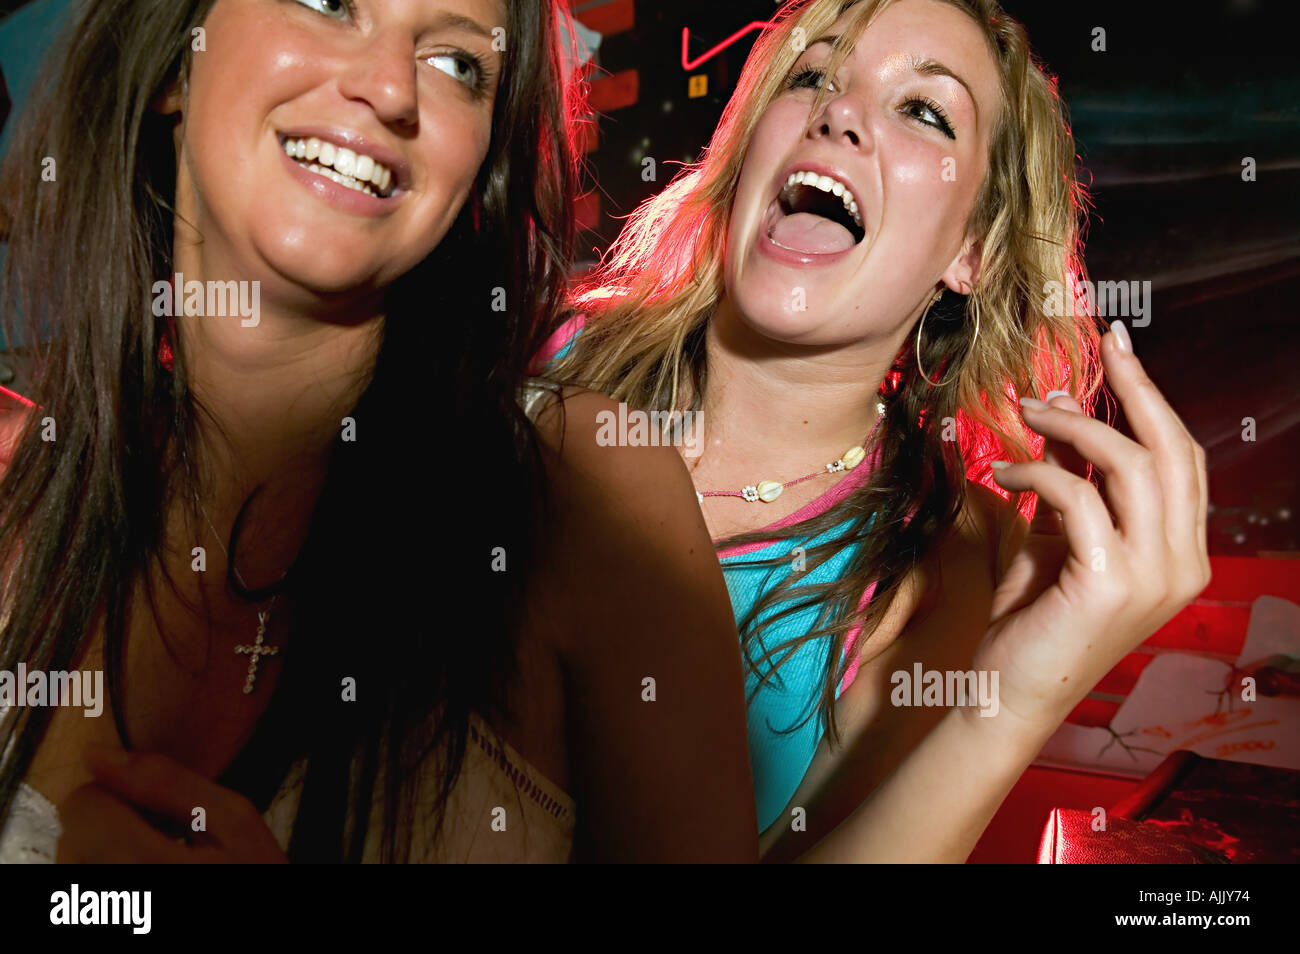 Dos mujeres borrachas Fotografía de stock - Alamy